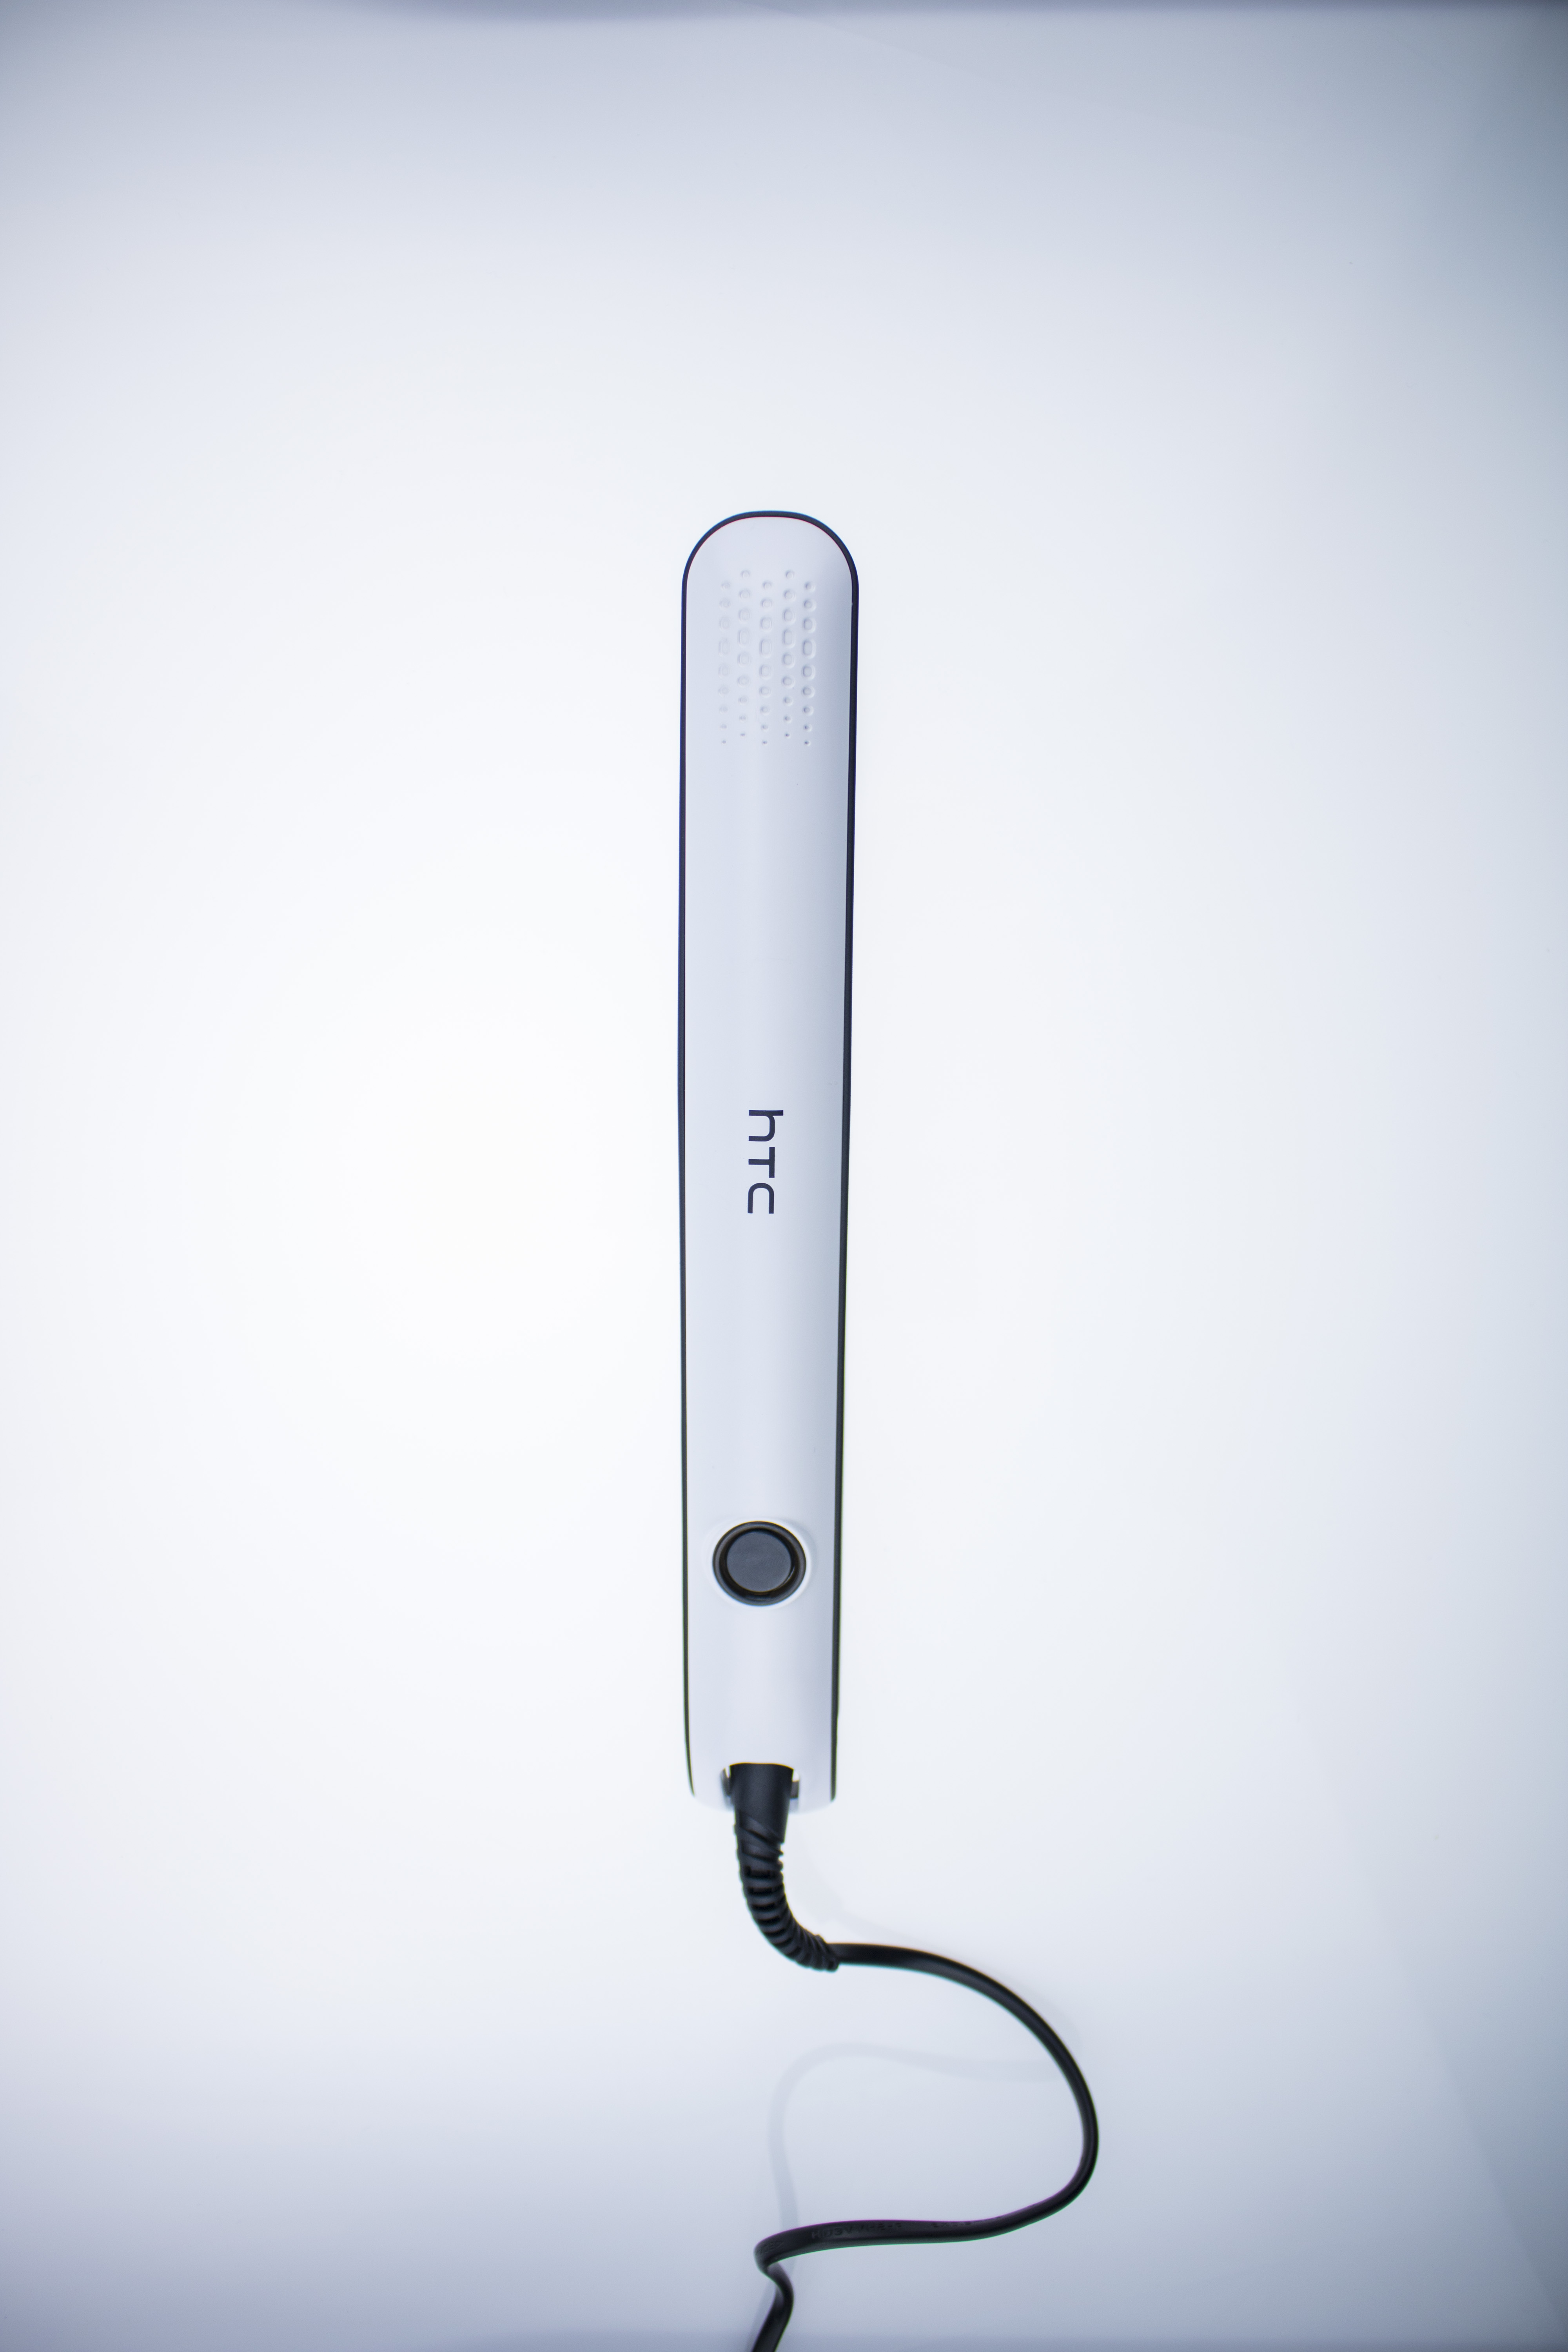 HTC JK6016 Flat Ceramic Hair Straightener - White